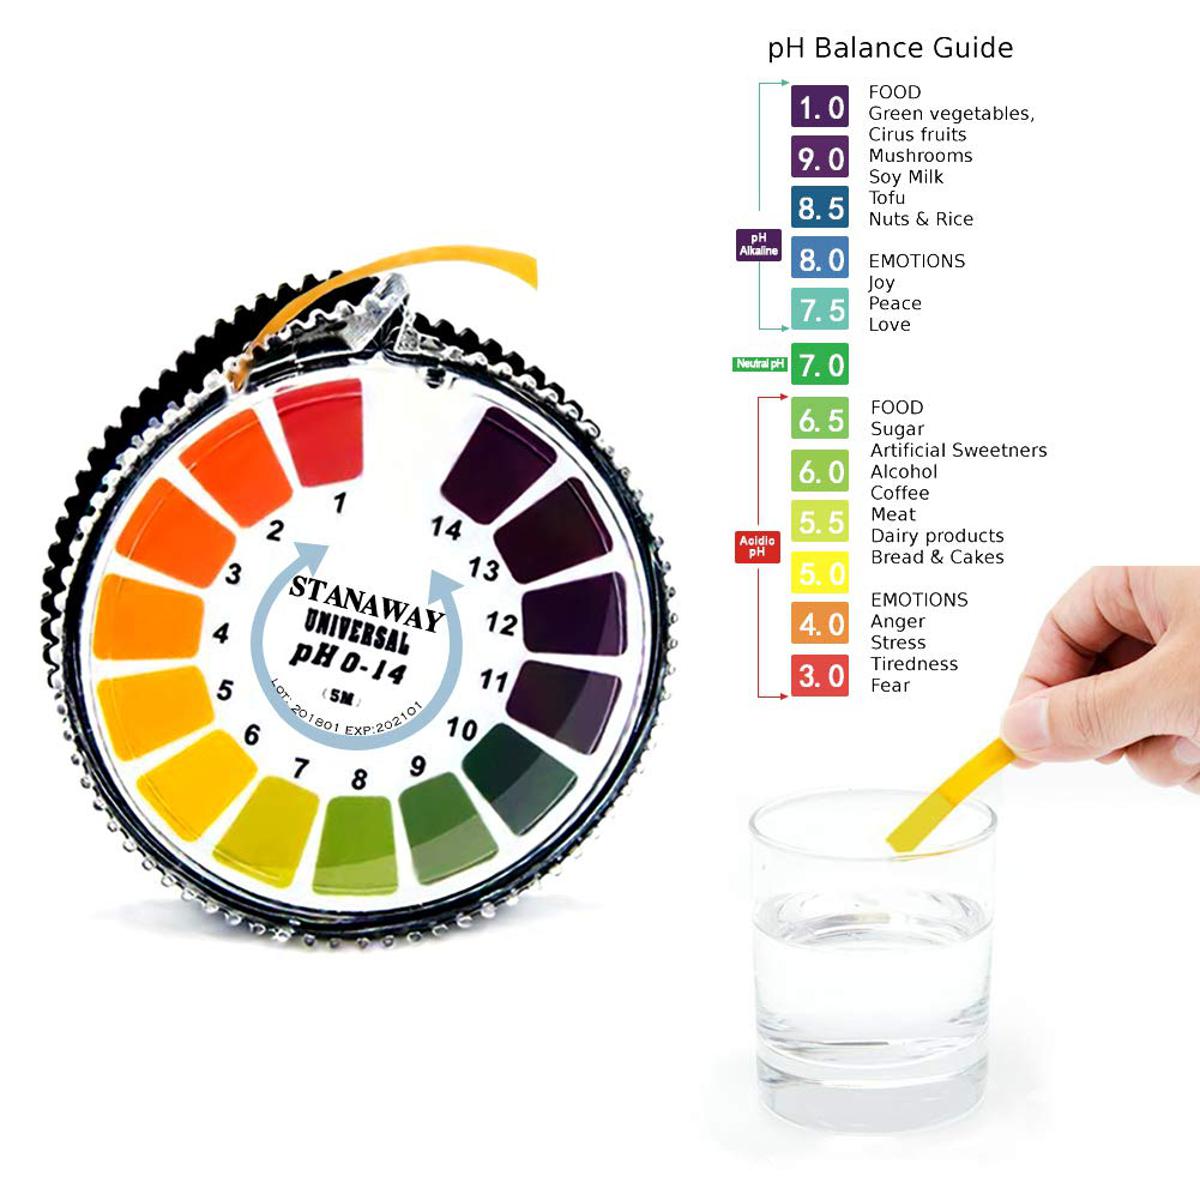 urine ph color chart